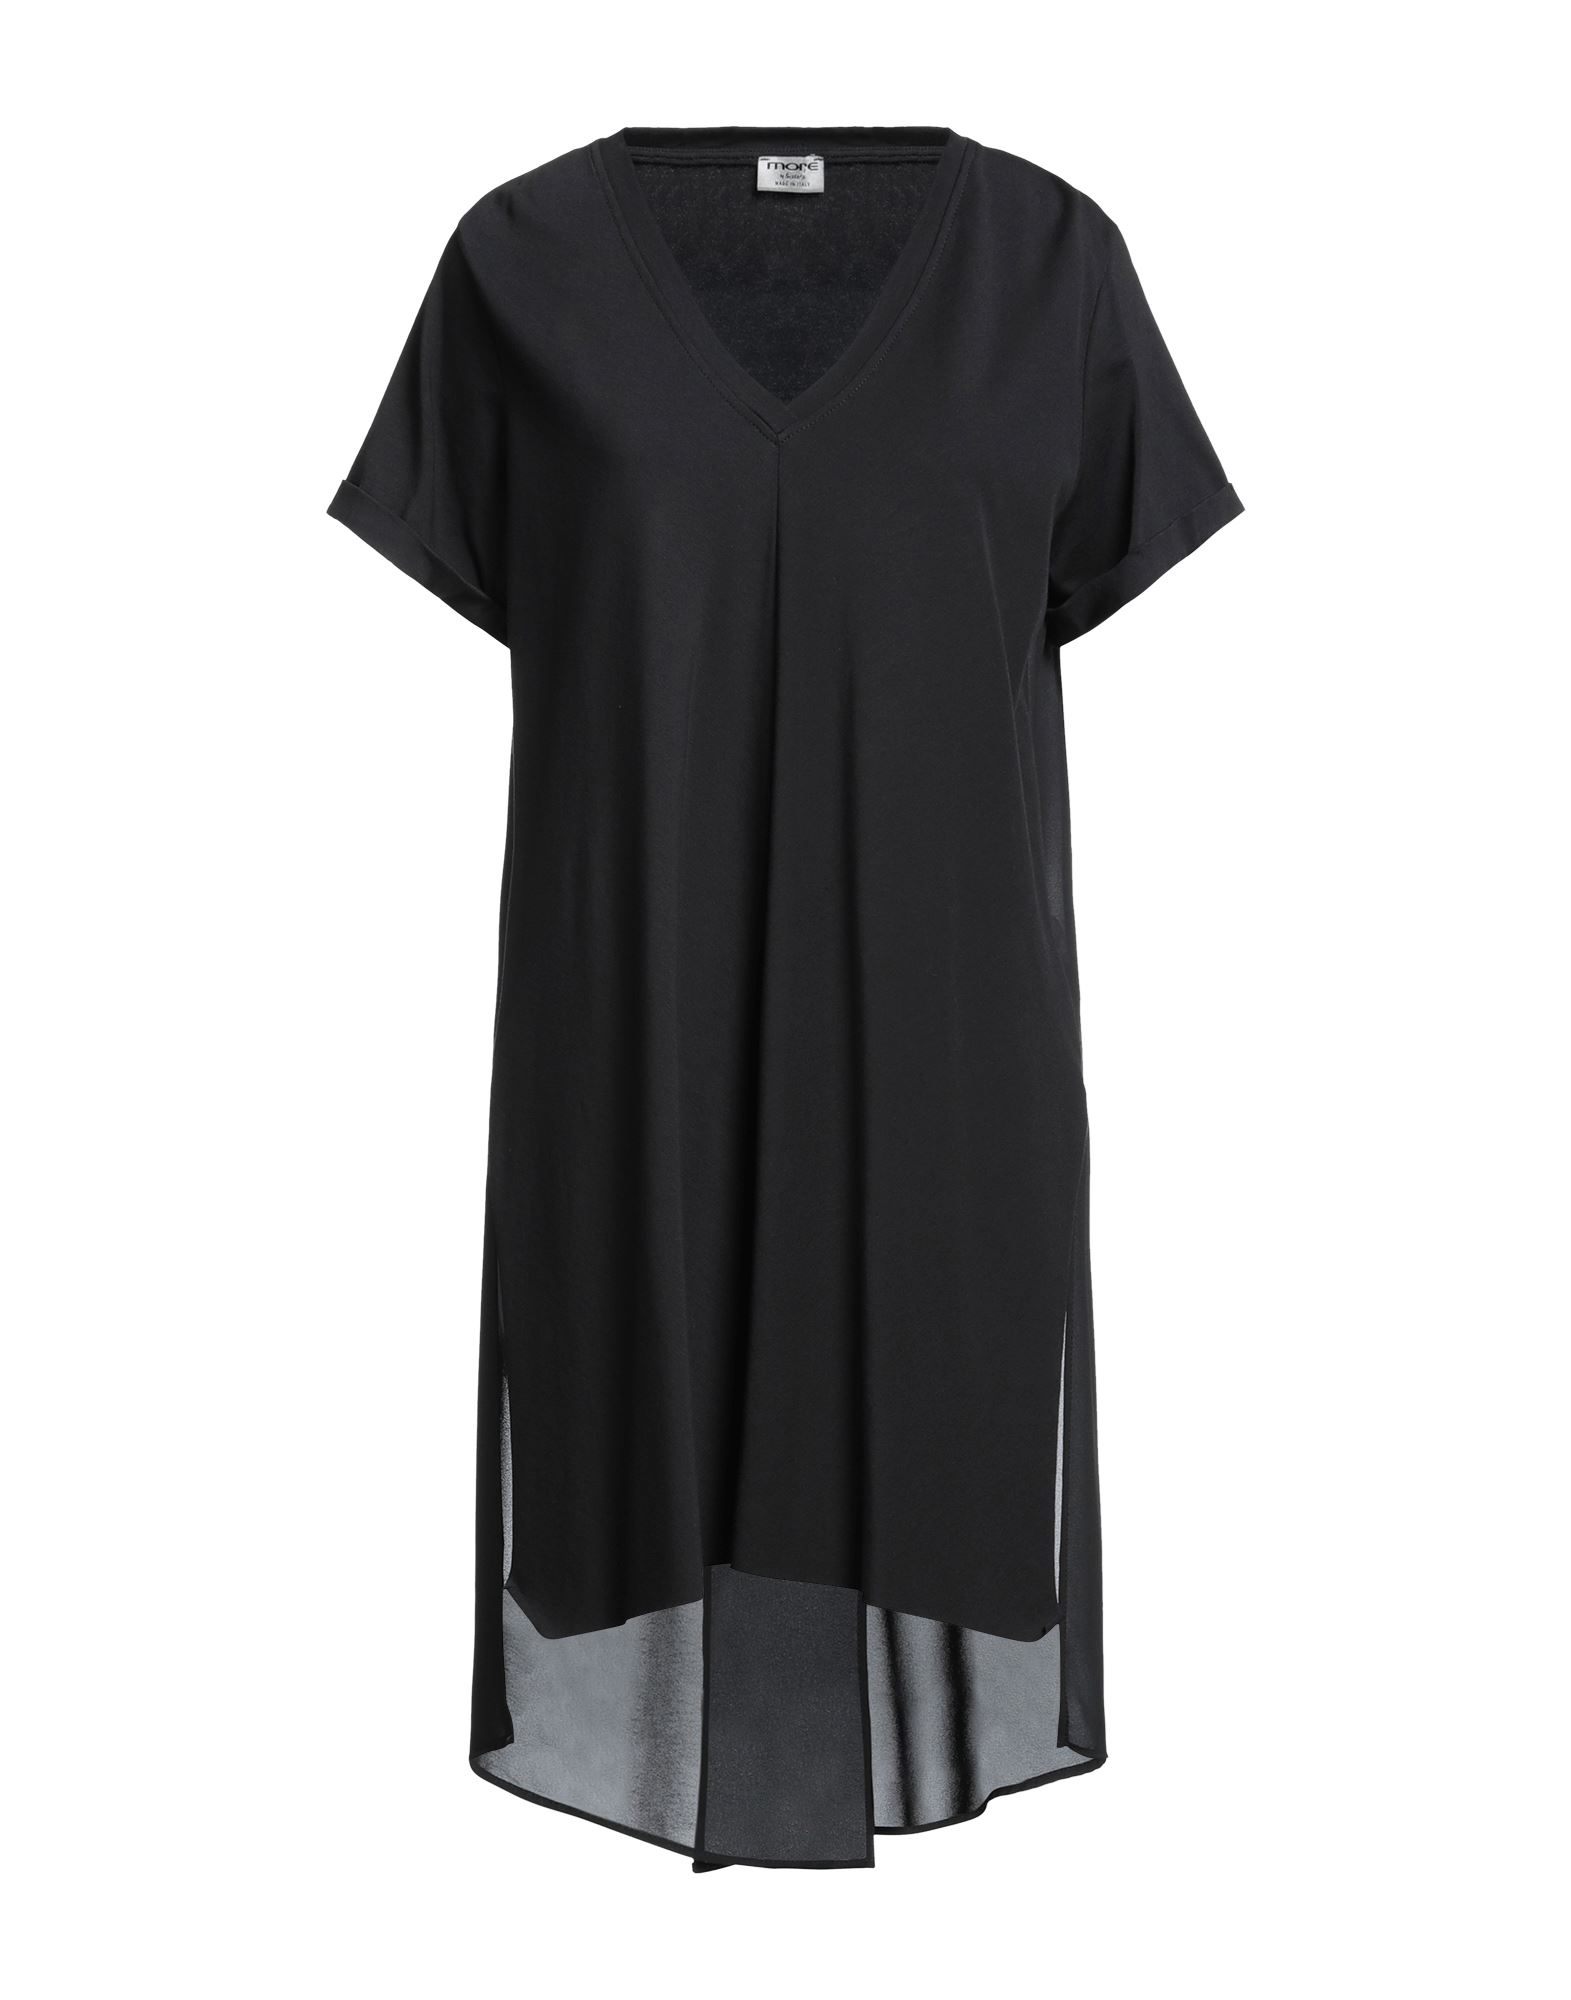 More By Siste's Woman T-shirt Black Size Xs Polyester, Cotton, Elastane